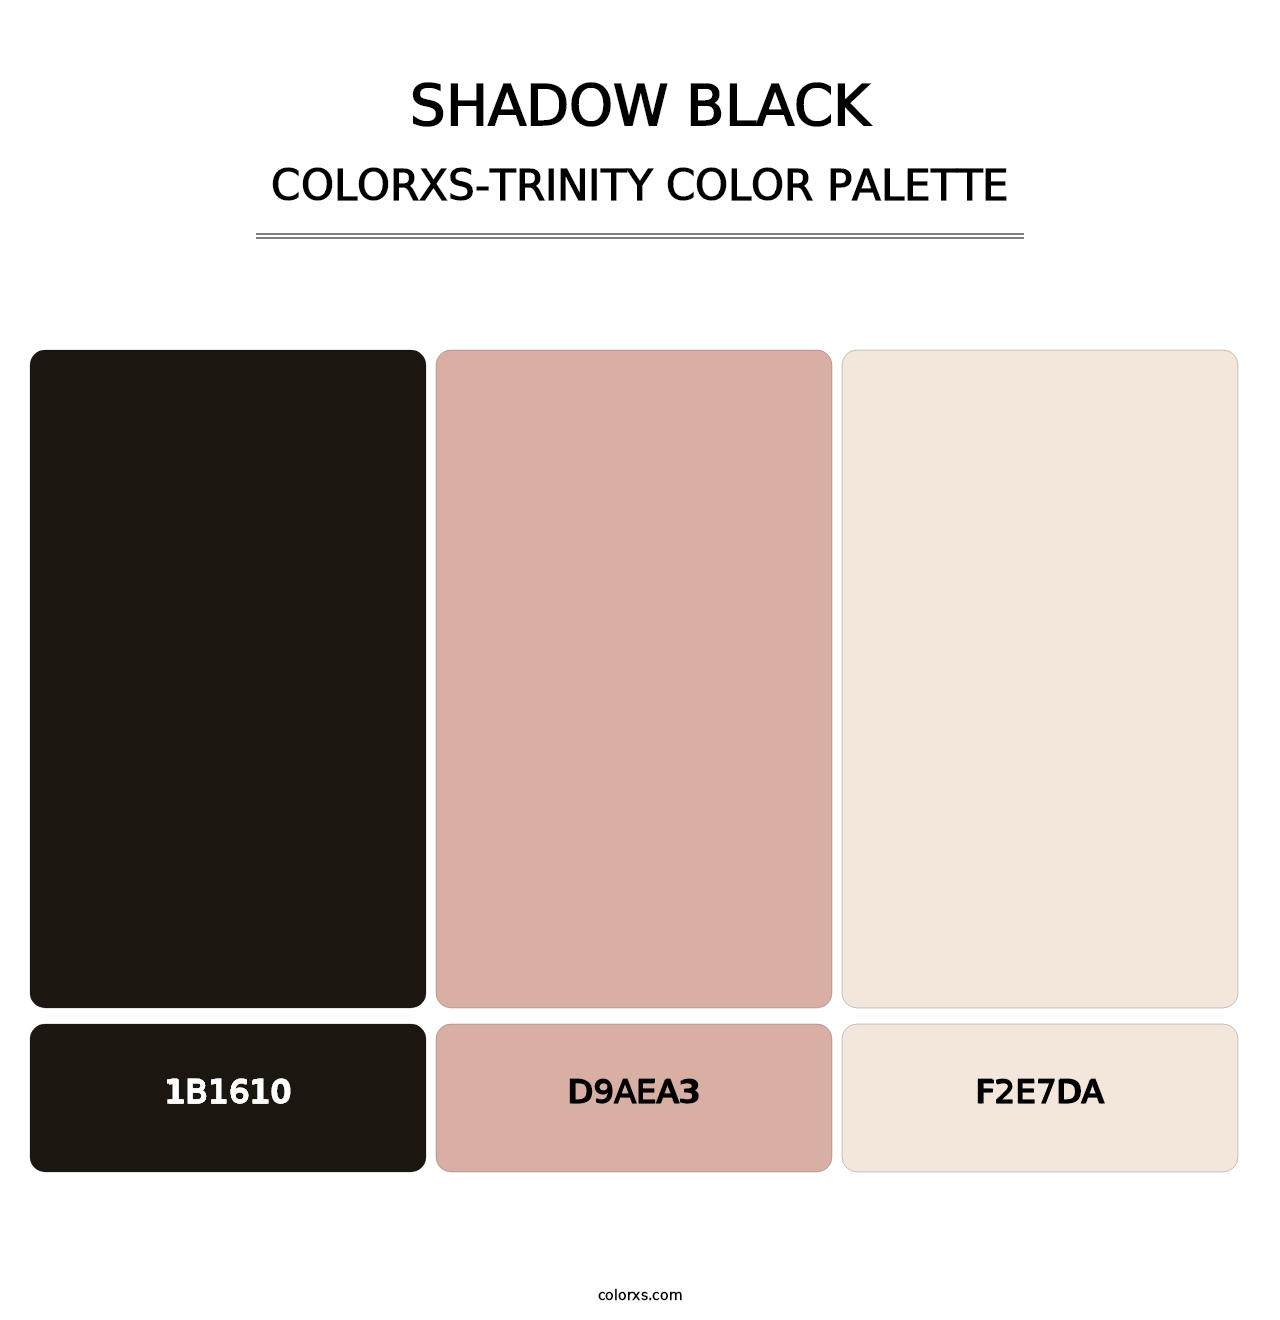 Shadow Black - Colorxs Trinity Palette